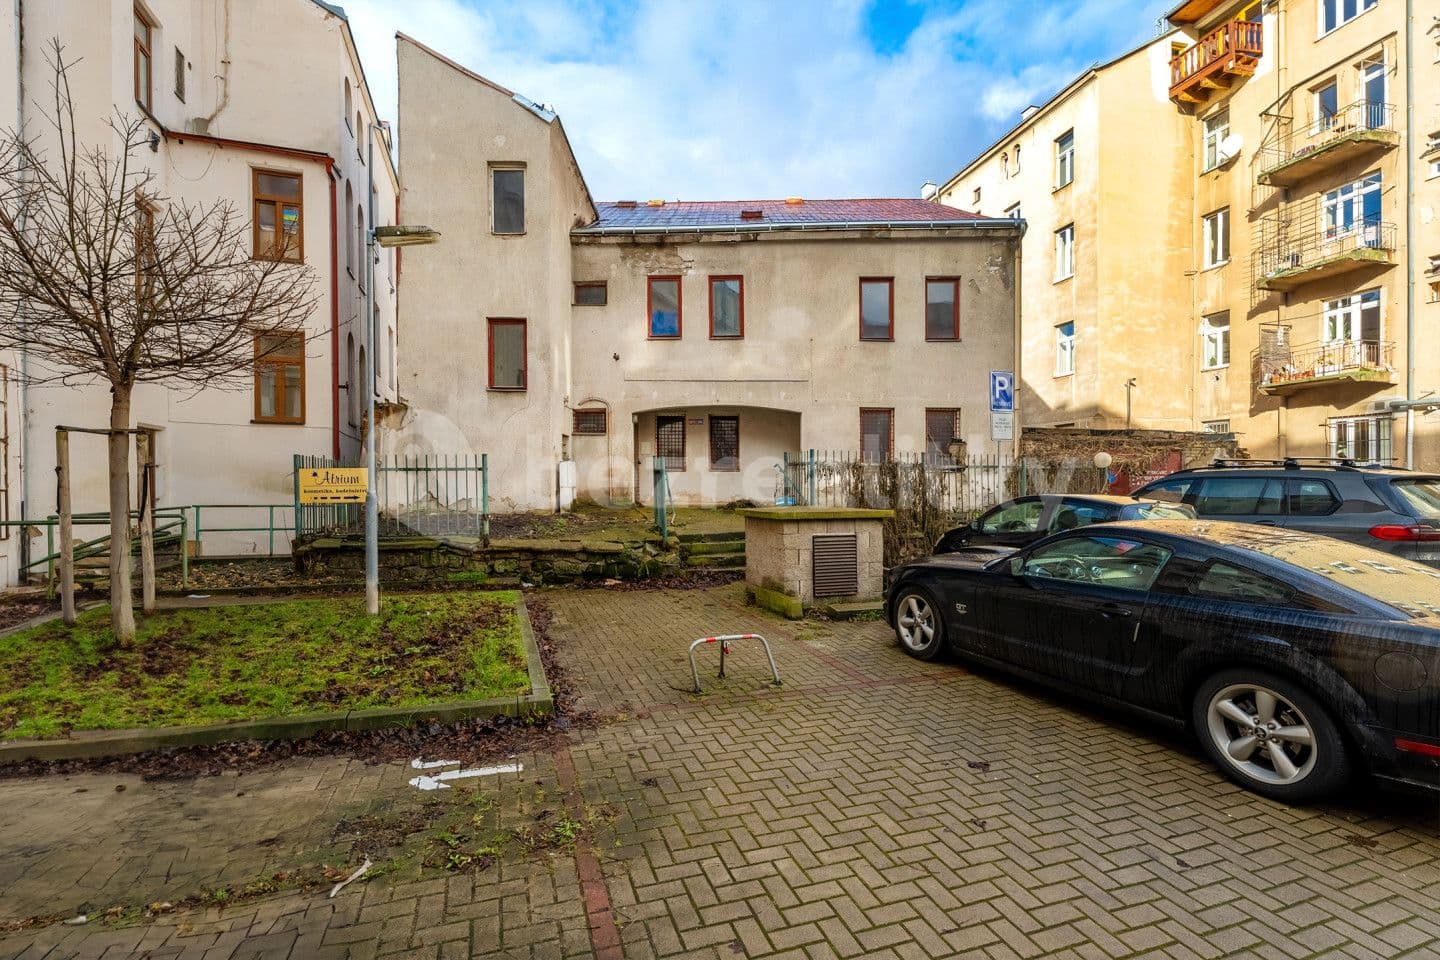 non-residential property for sale, 244 m², Velká Hradební, Ústí nad Labem, Ústecký Region